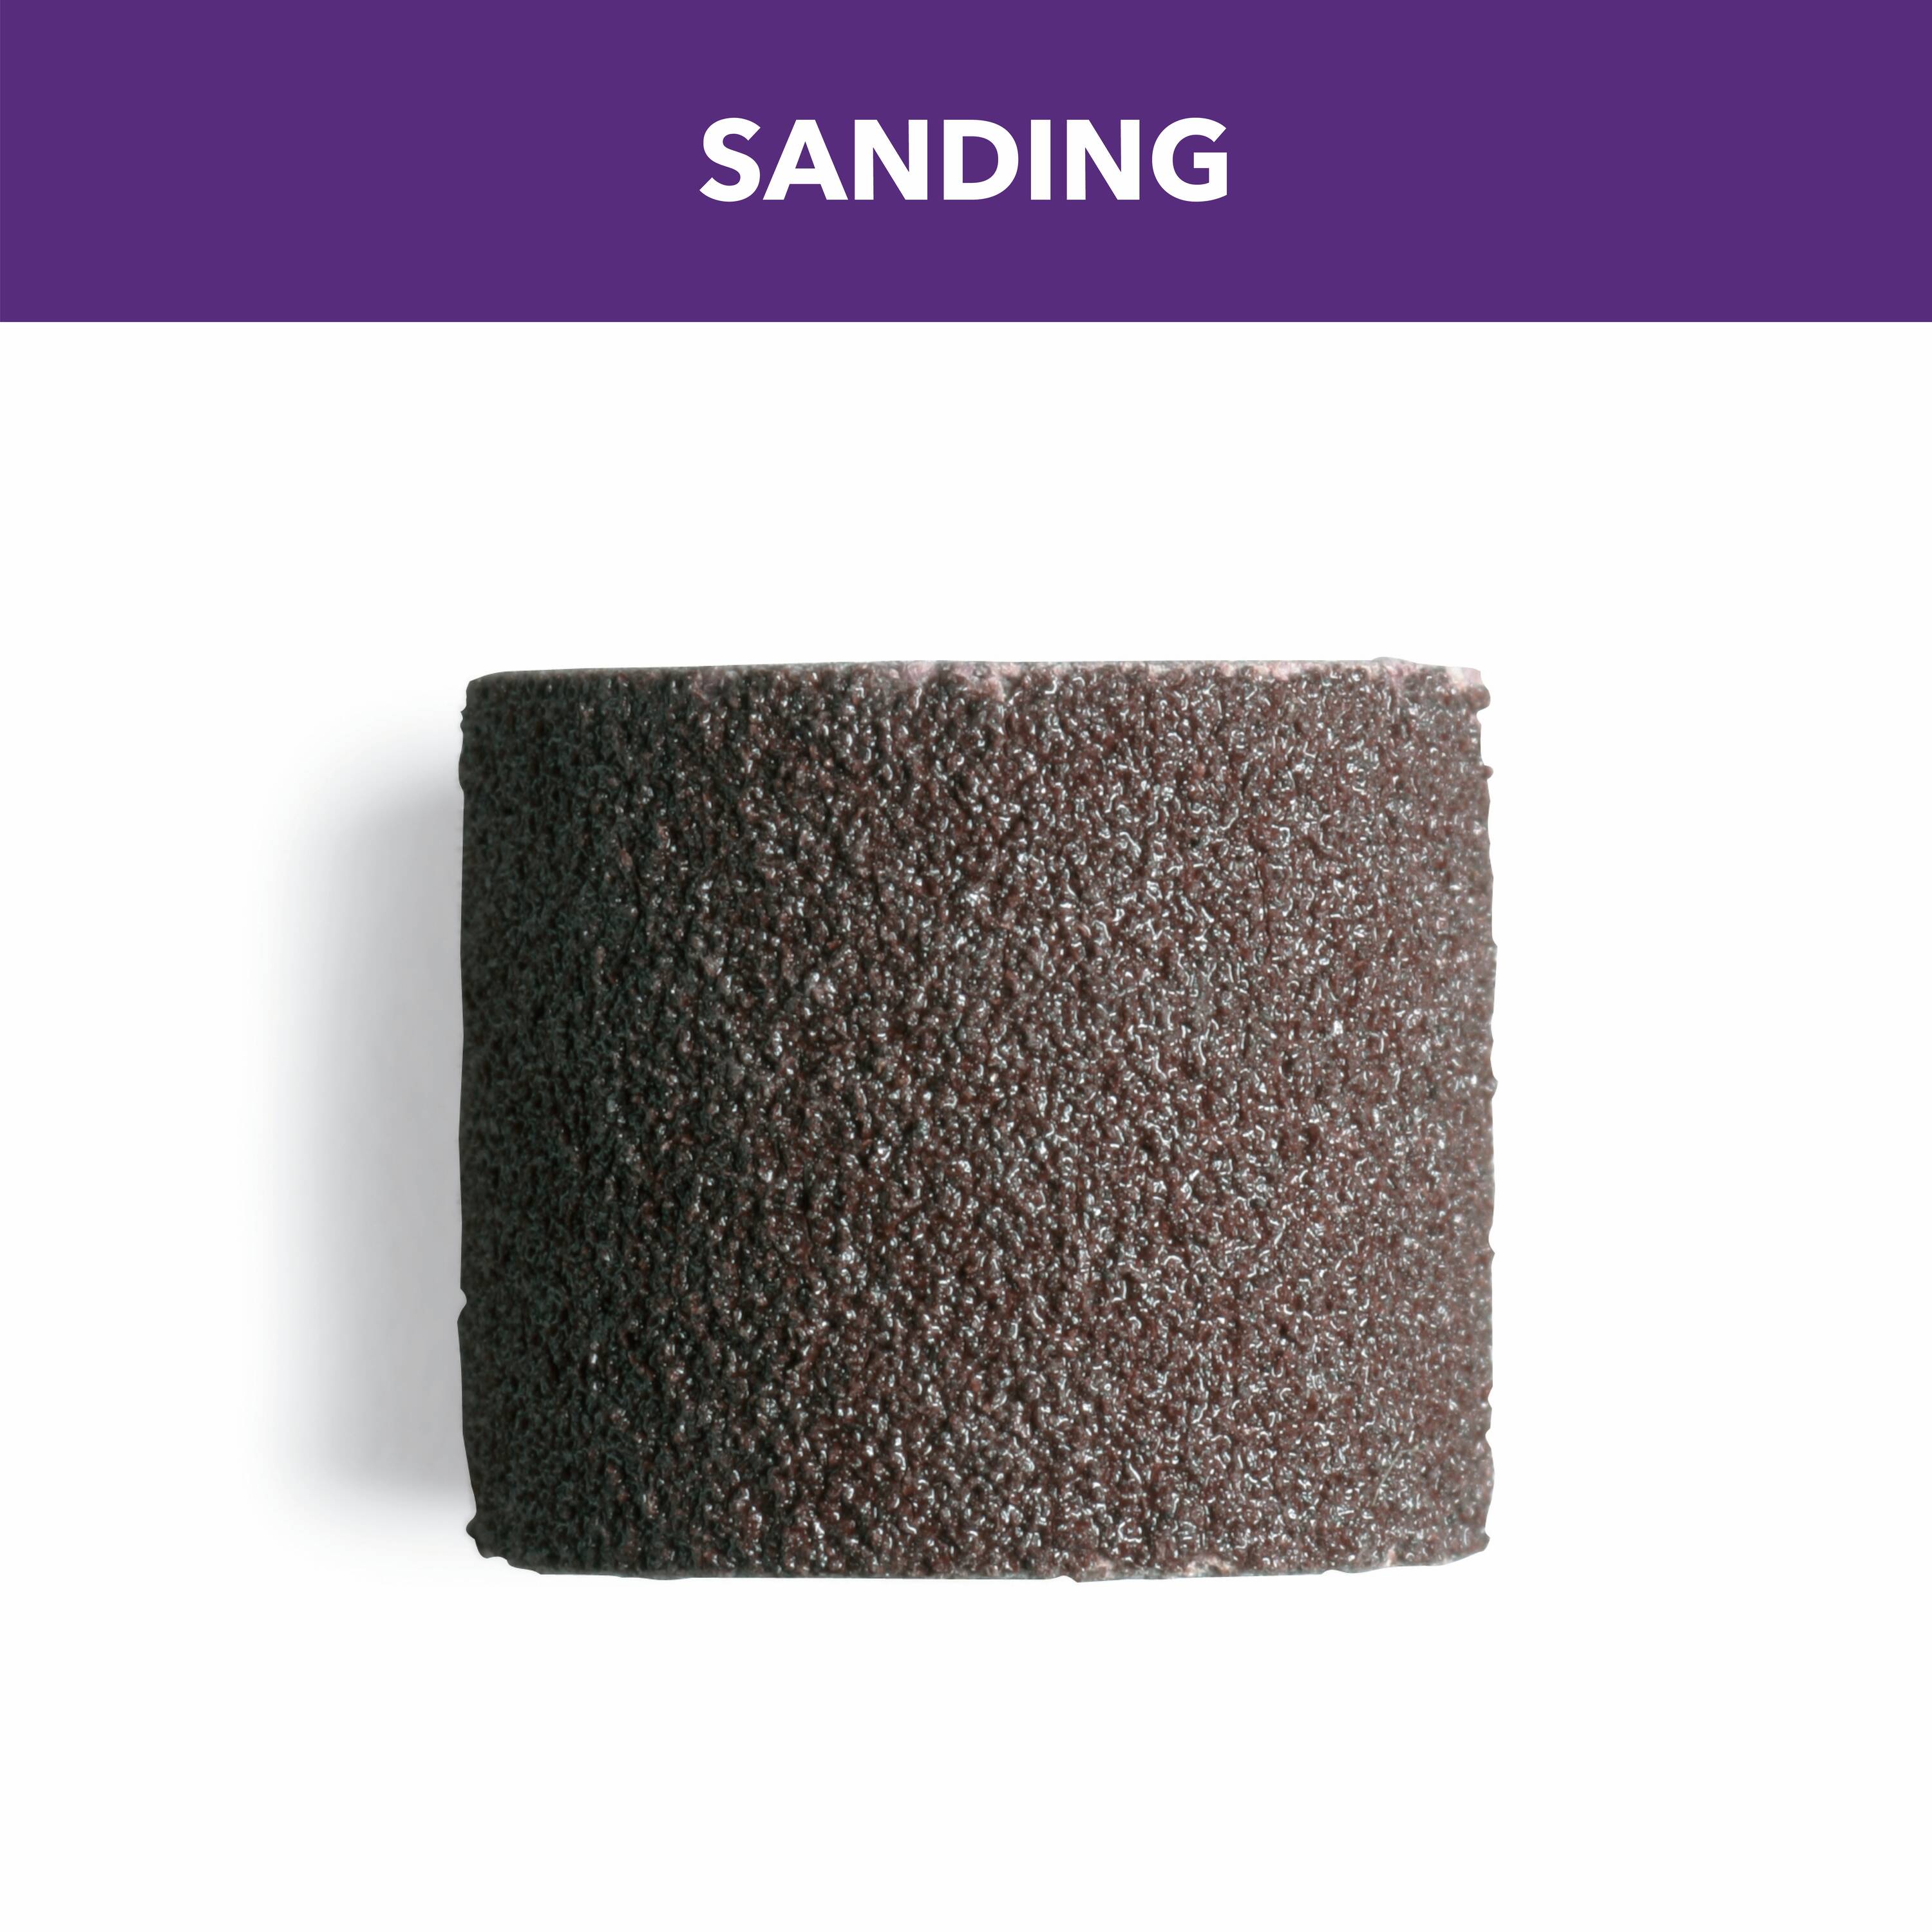 100PCS 80#-600# Grit Sanding Drums Sanders Bands Bits Dremel Accessories  Rotary Tool Grinding Sanding Bit Rotary Abrasive Tools